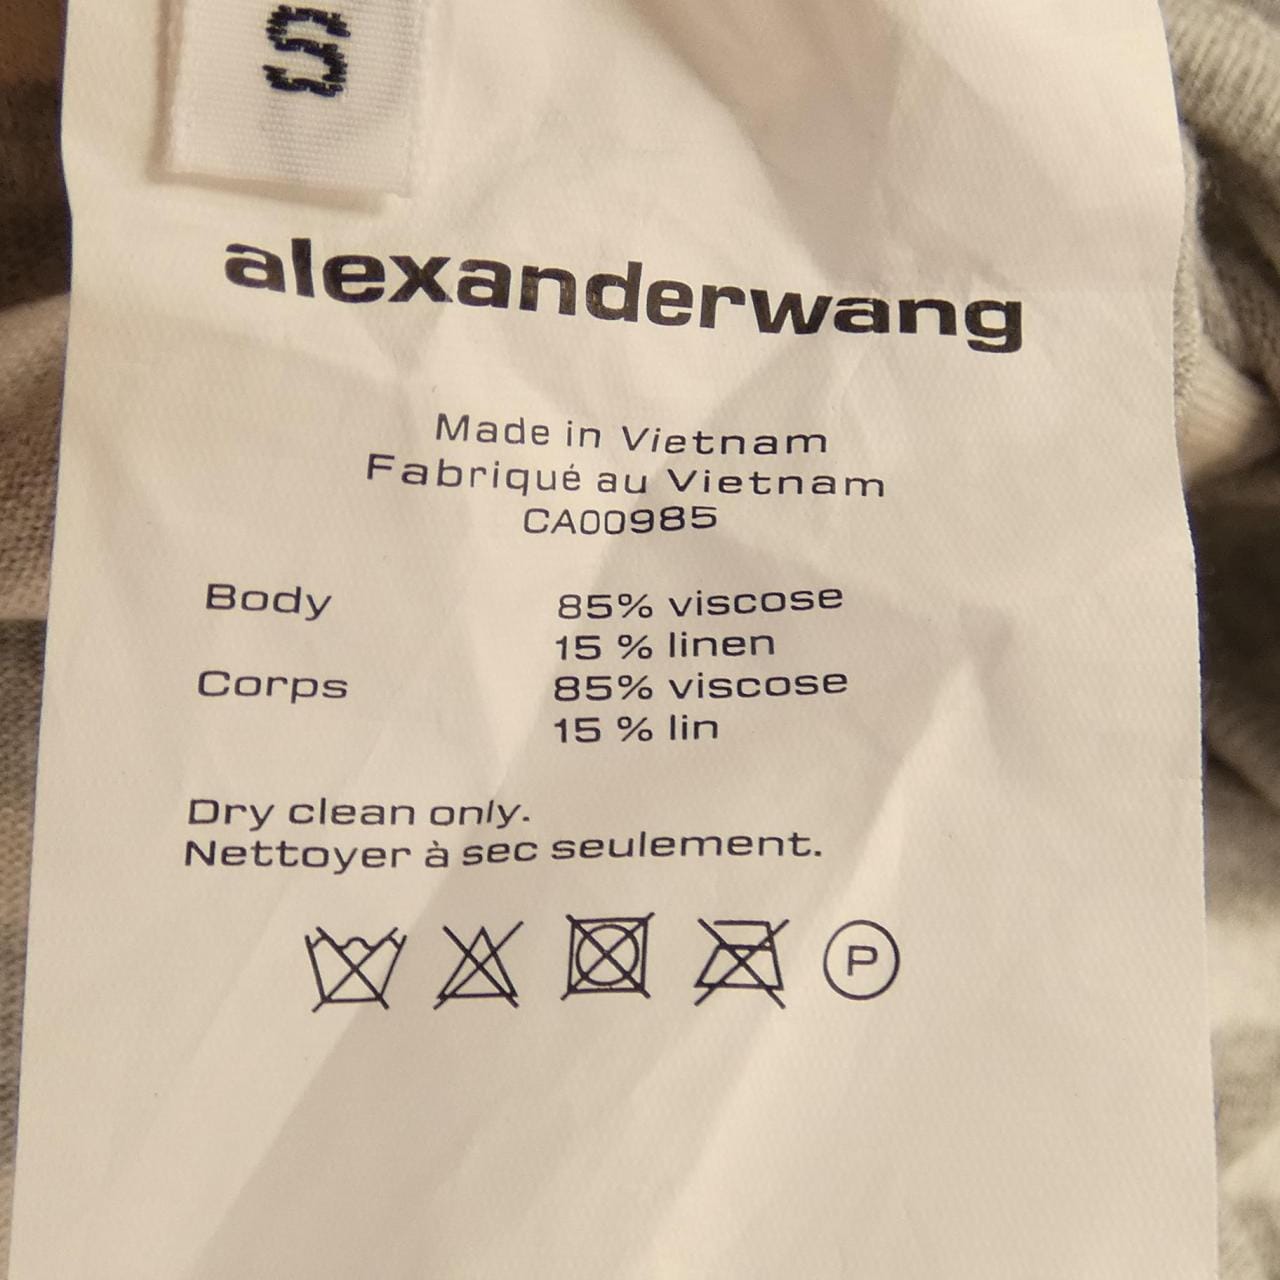 ALEXANDER WANG alexanderwang.t Tops